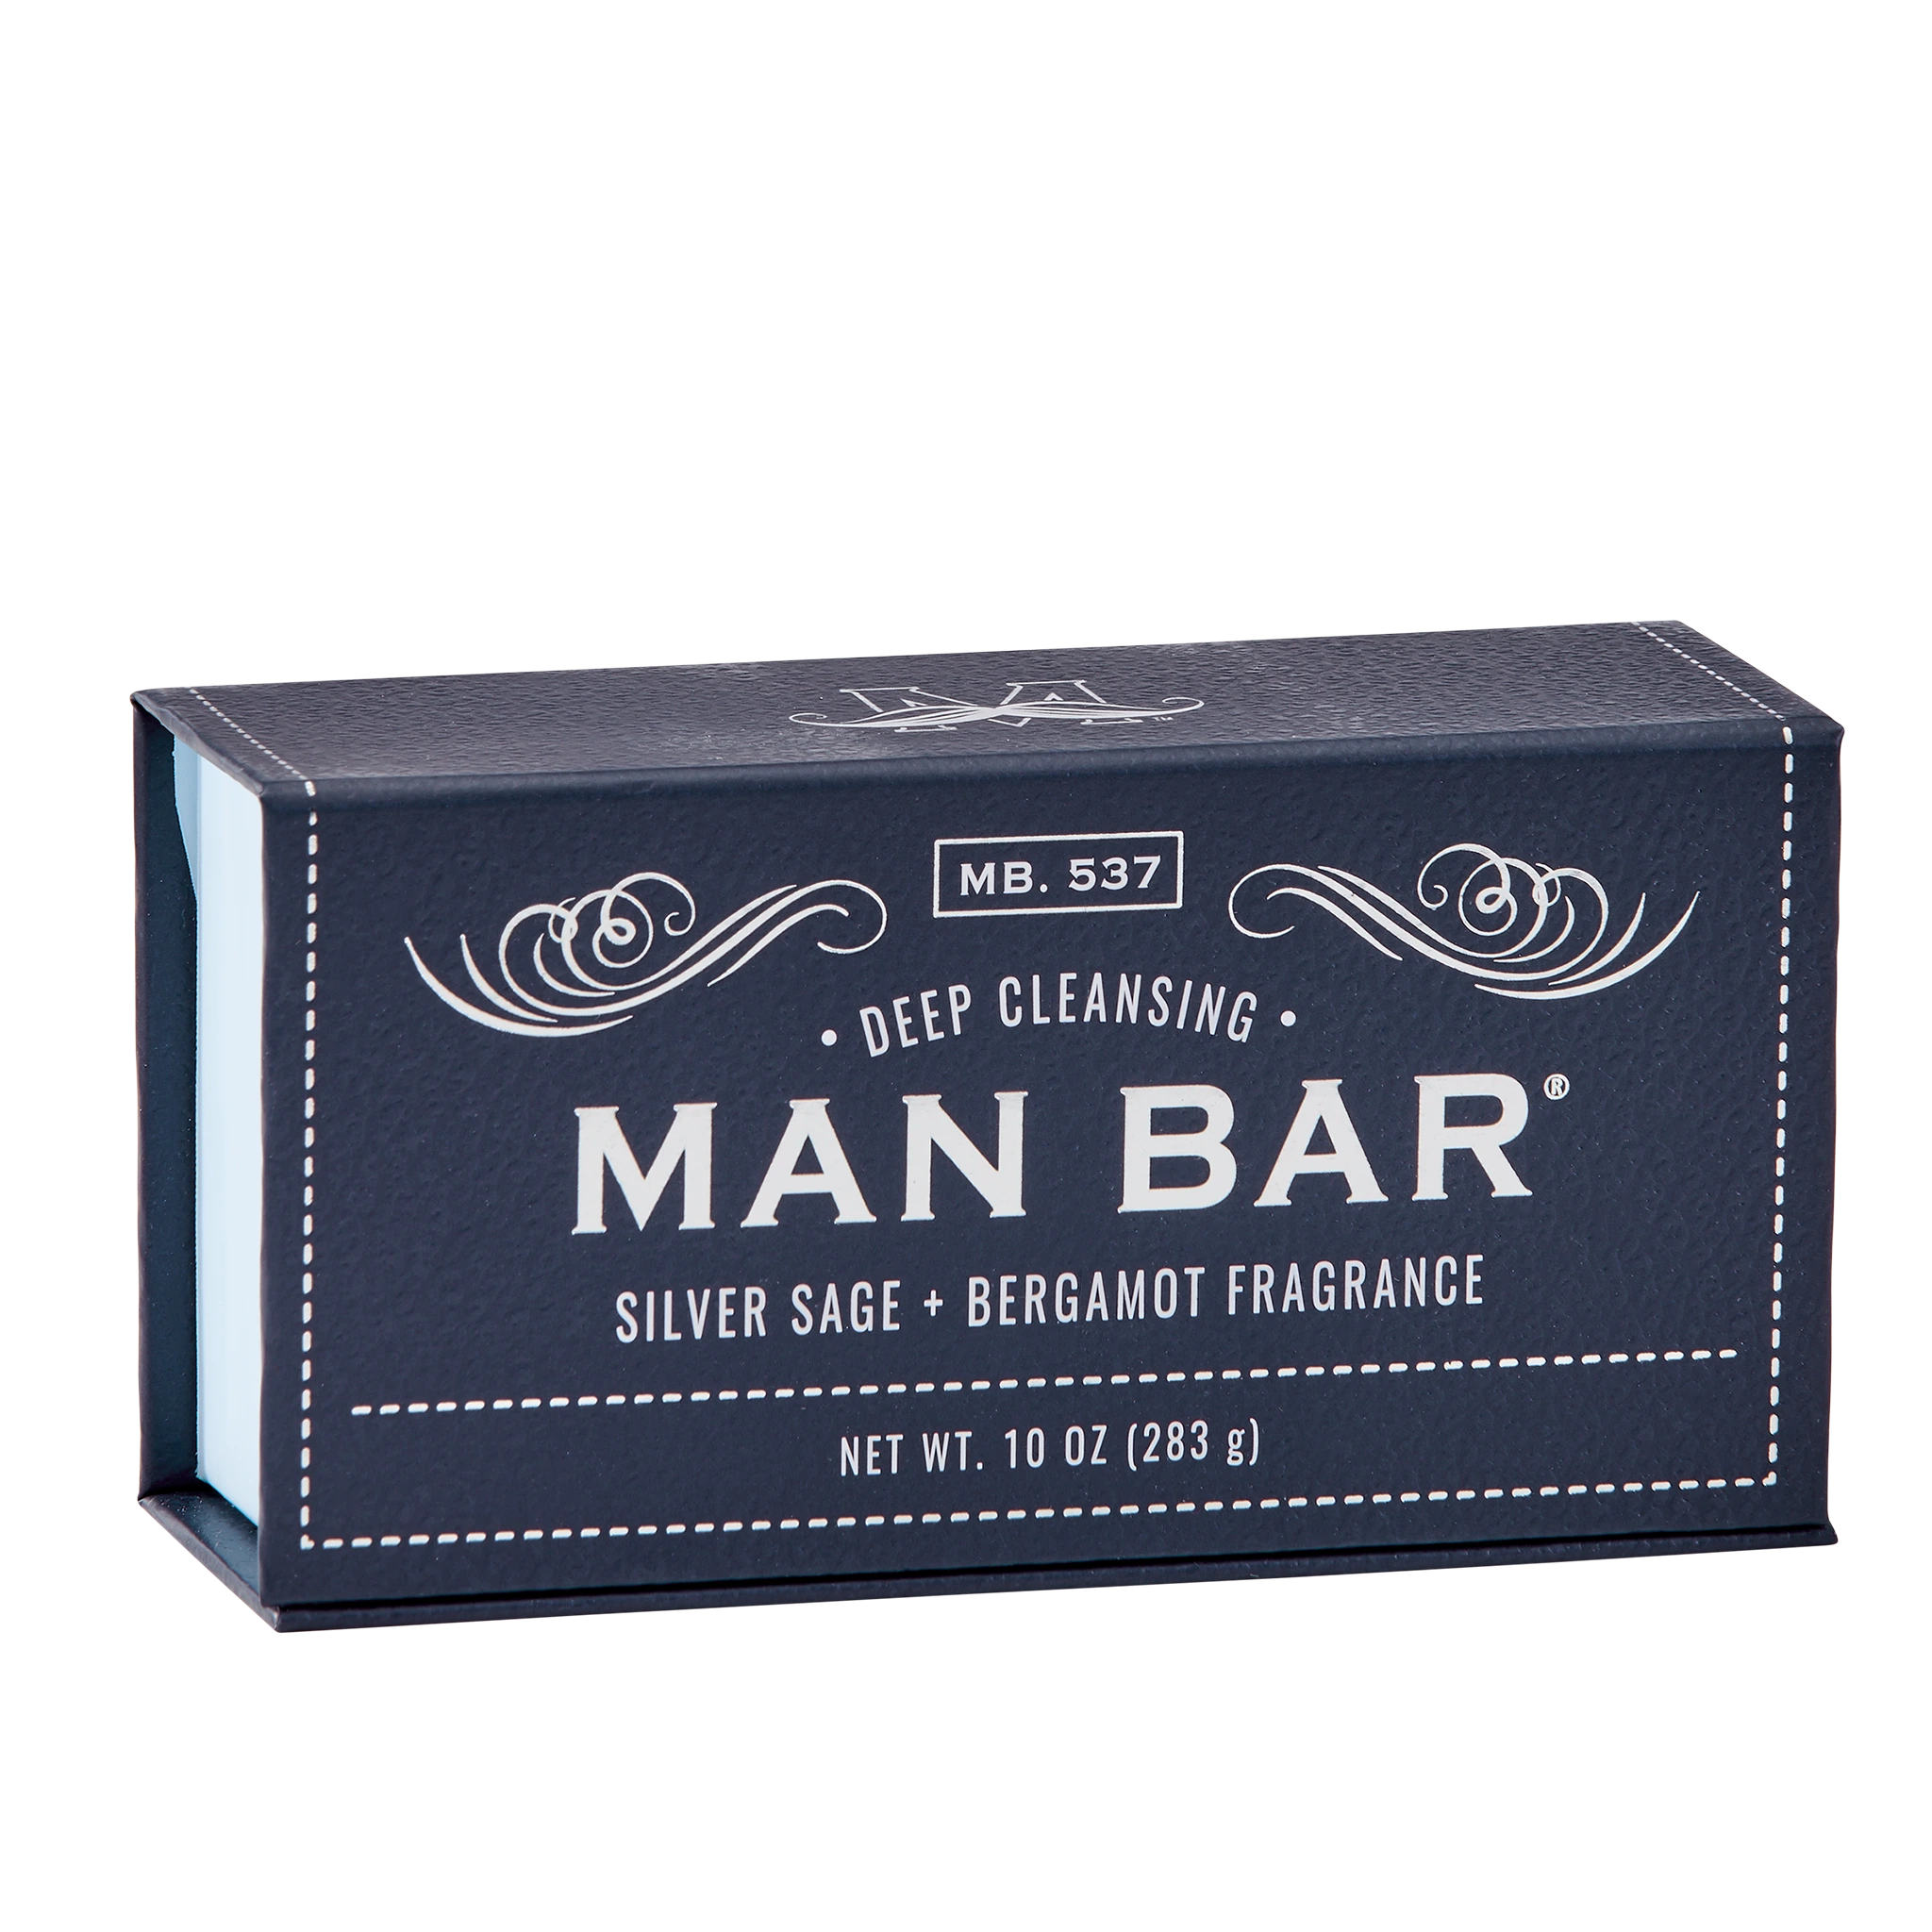 Man Bar Deep Cleansing Silver Sage & Bergamot soap box